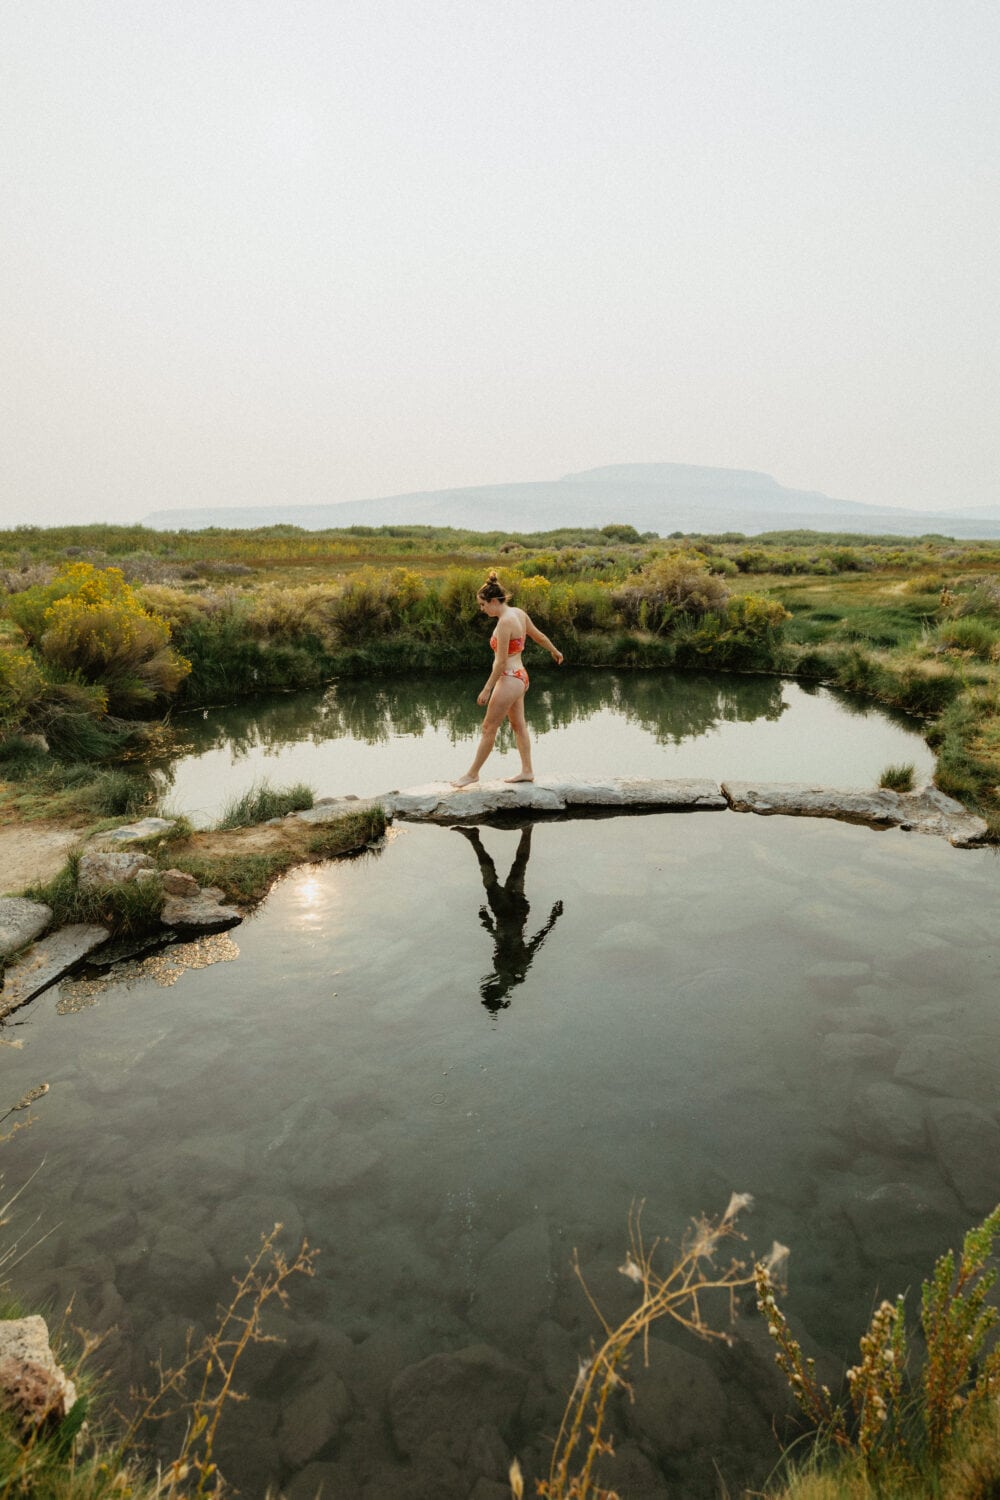 Emily Mandagie at Willow Creek Hot Springs during sunset